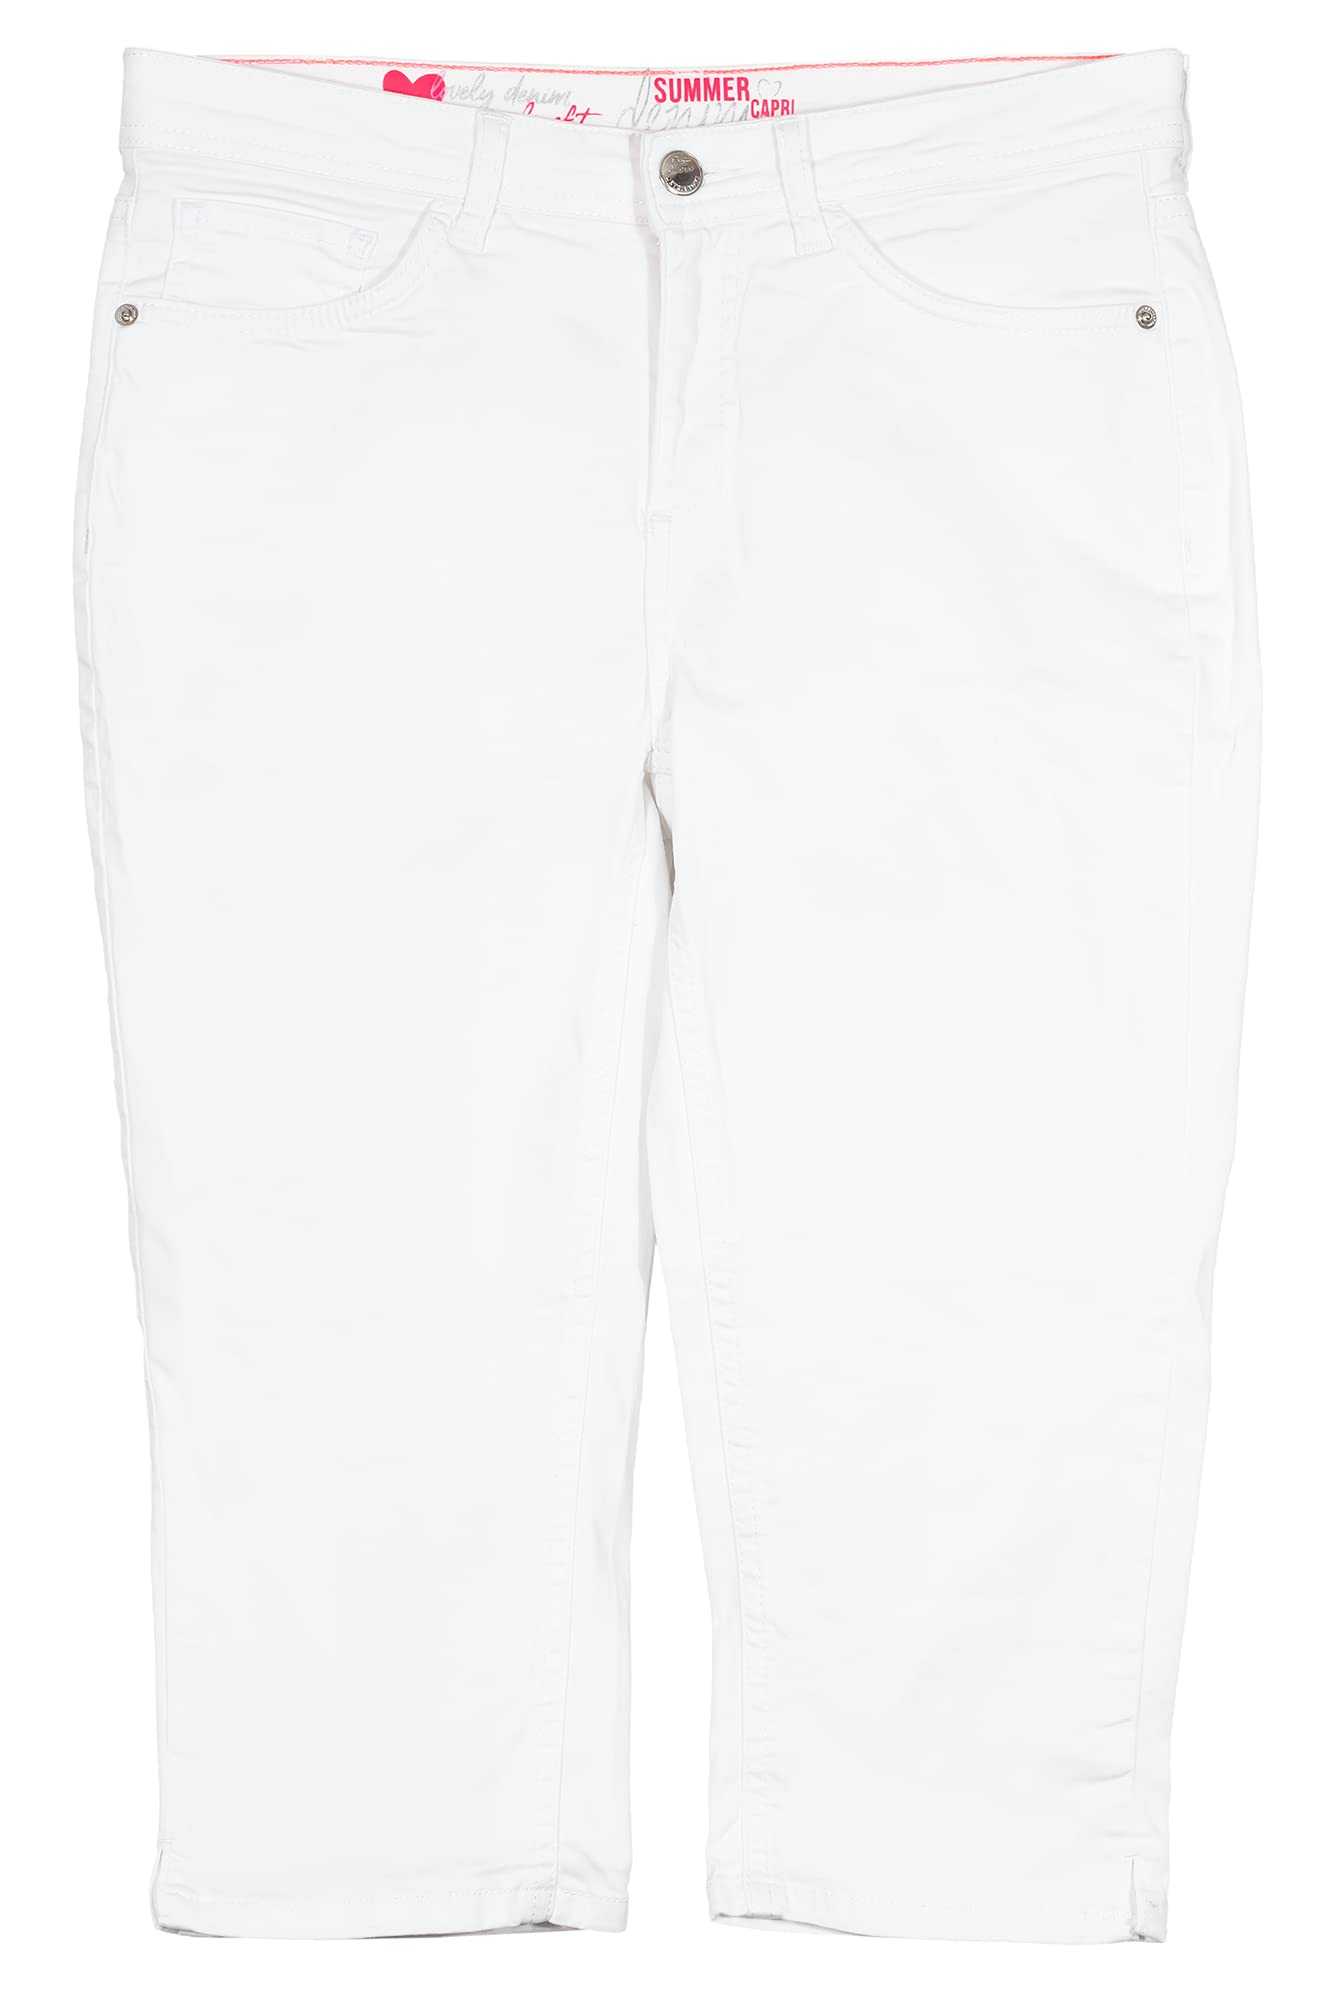 Street One Damen York Capri Jeans, White, W27/L18